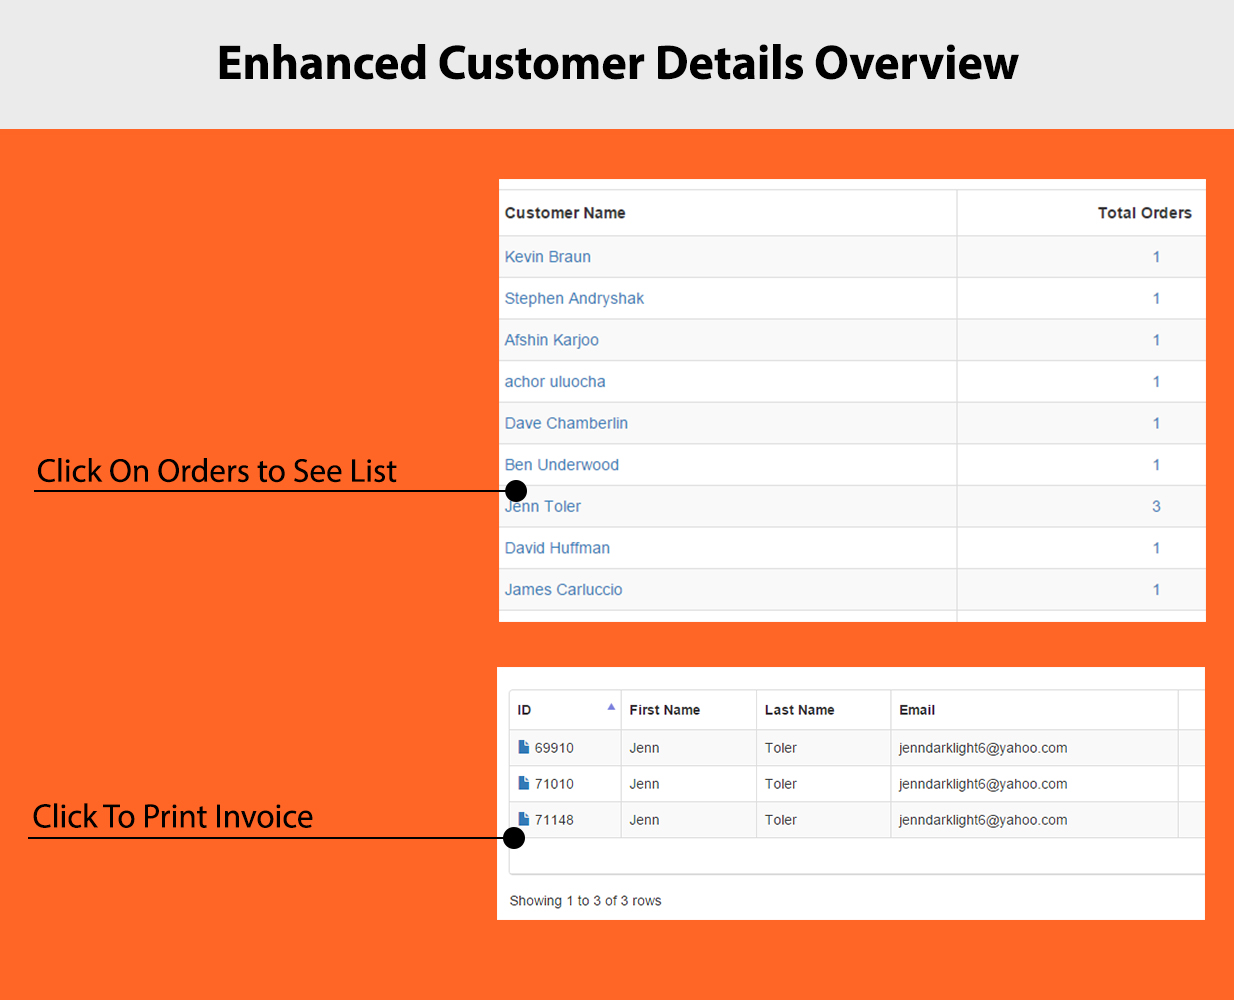 Customer Data Overview